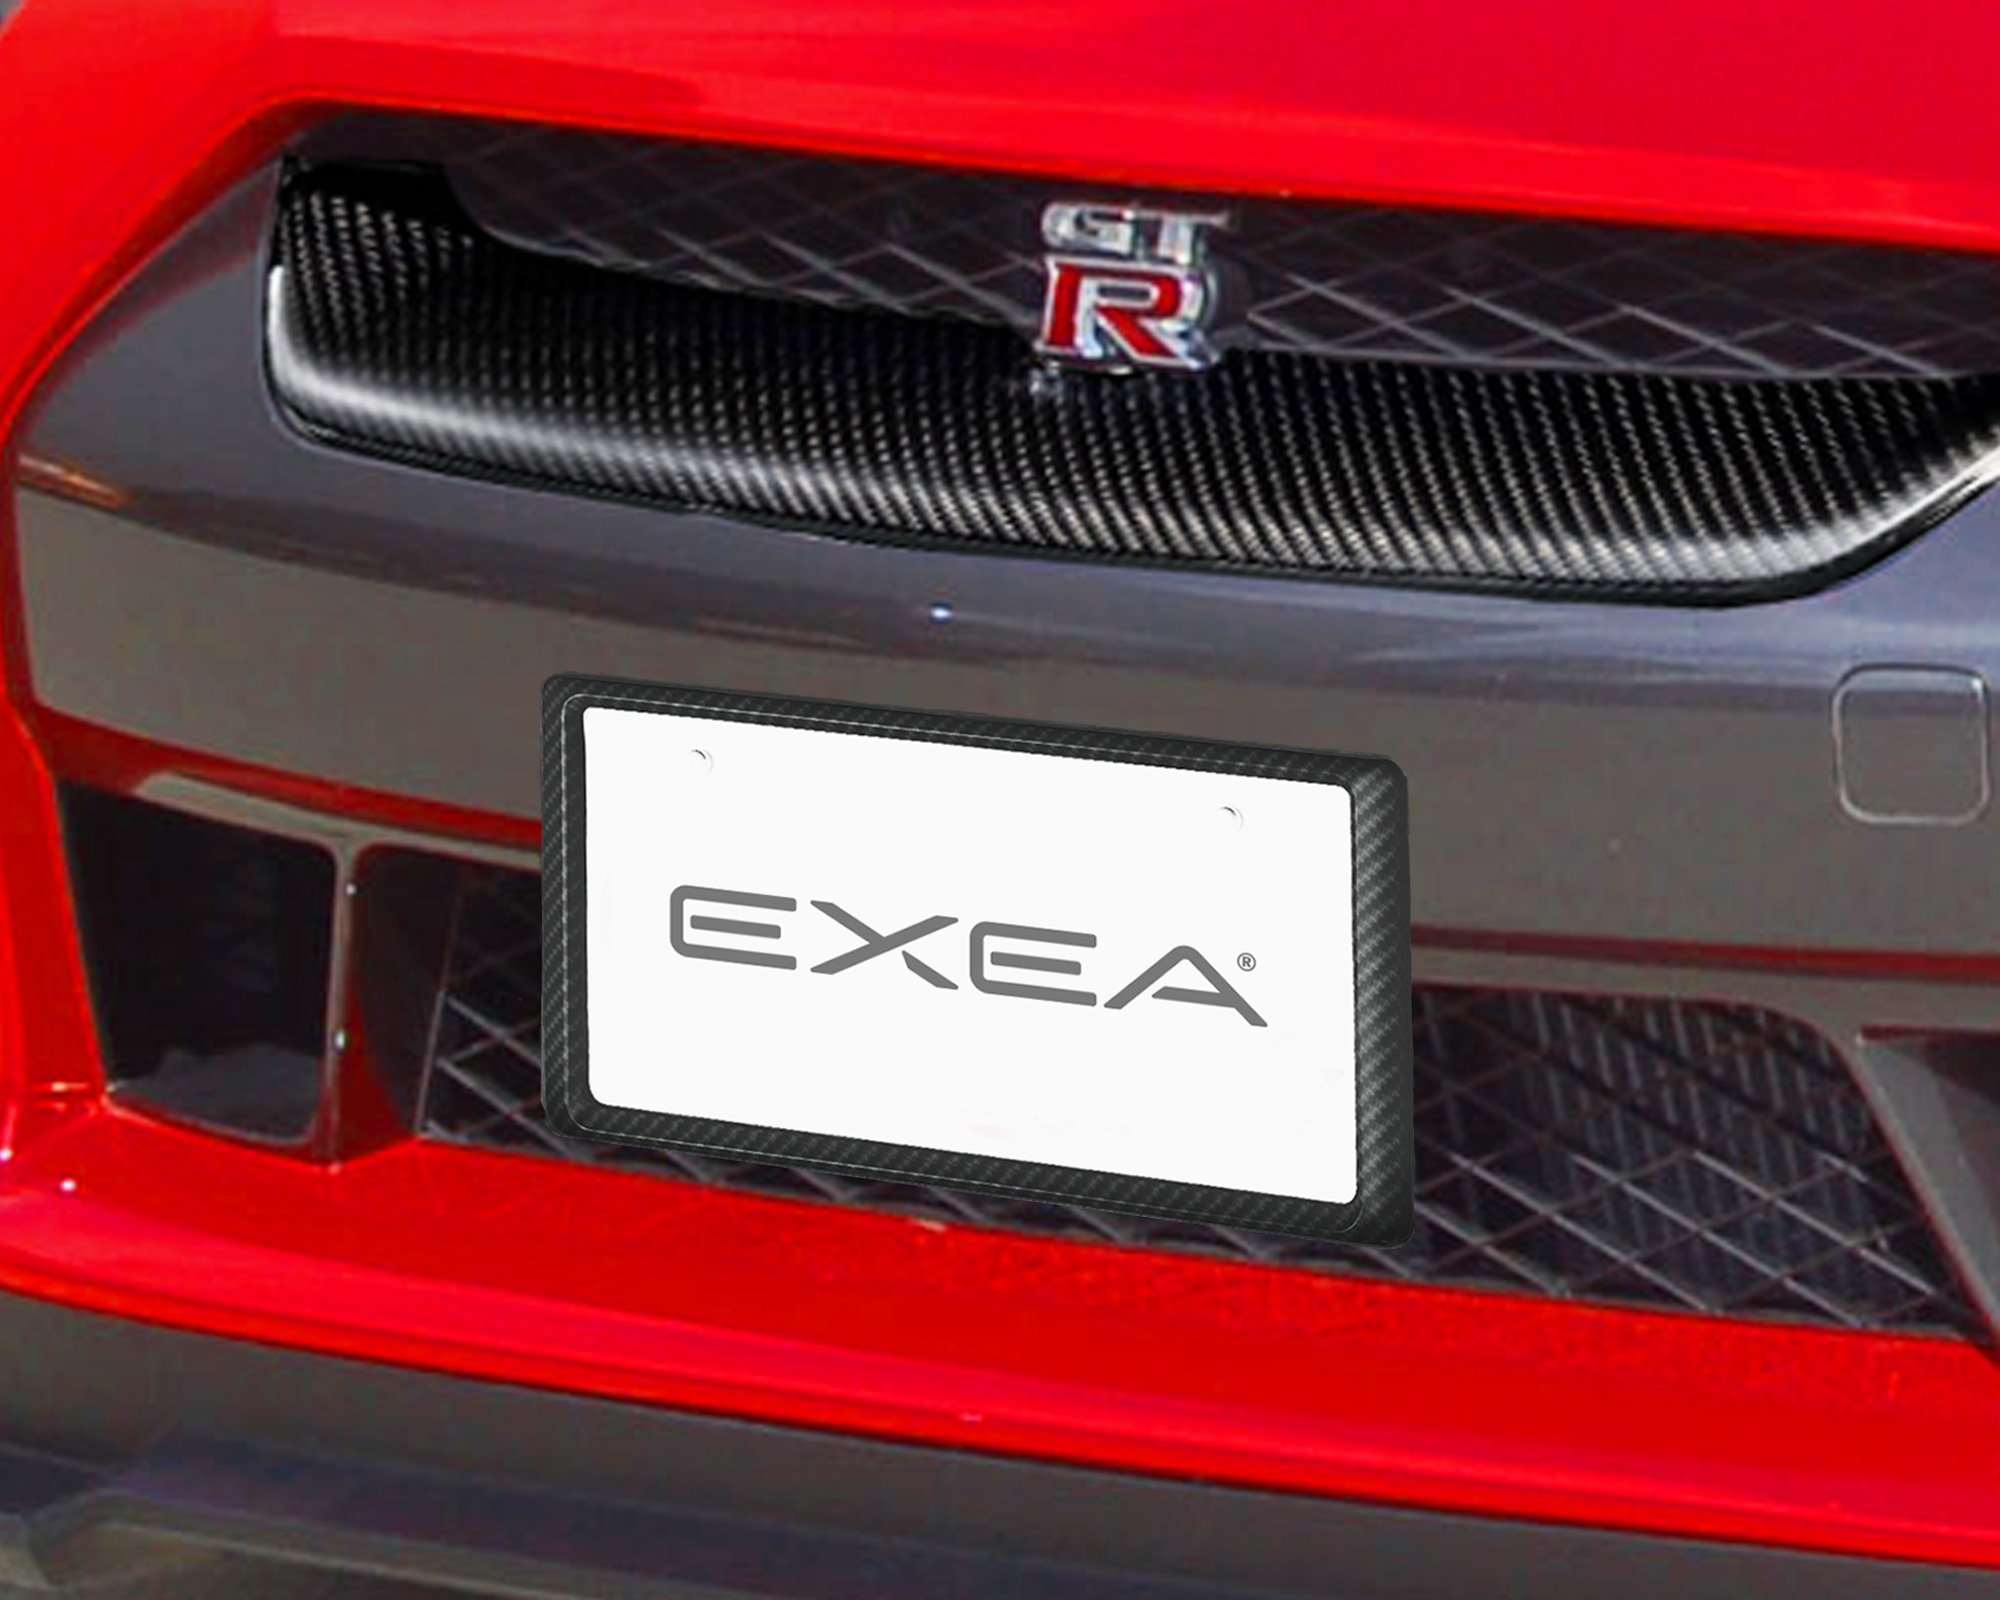 EXEA | 自動車用品の製造・販売